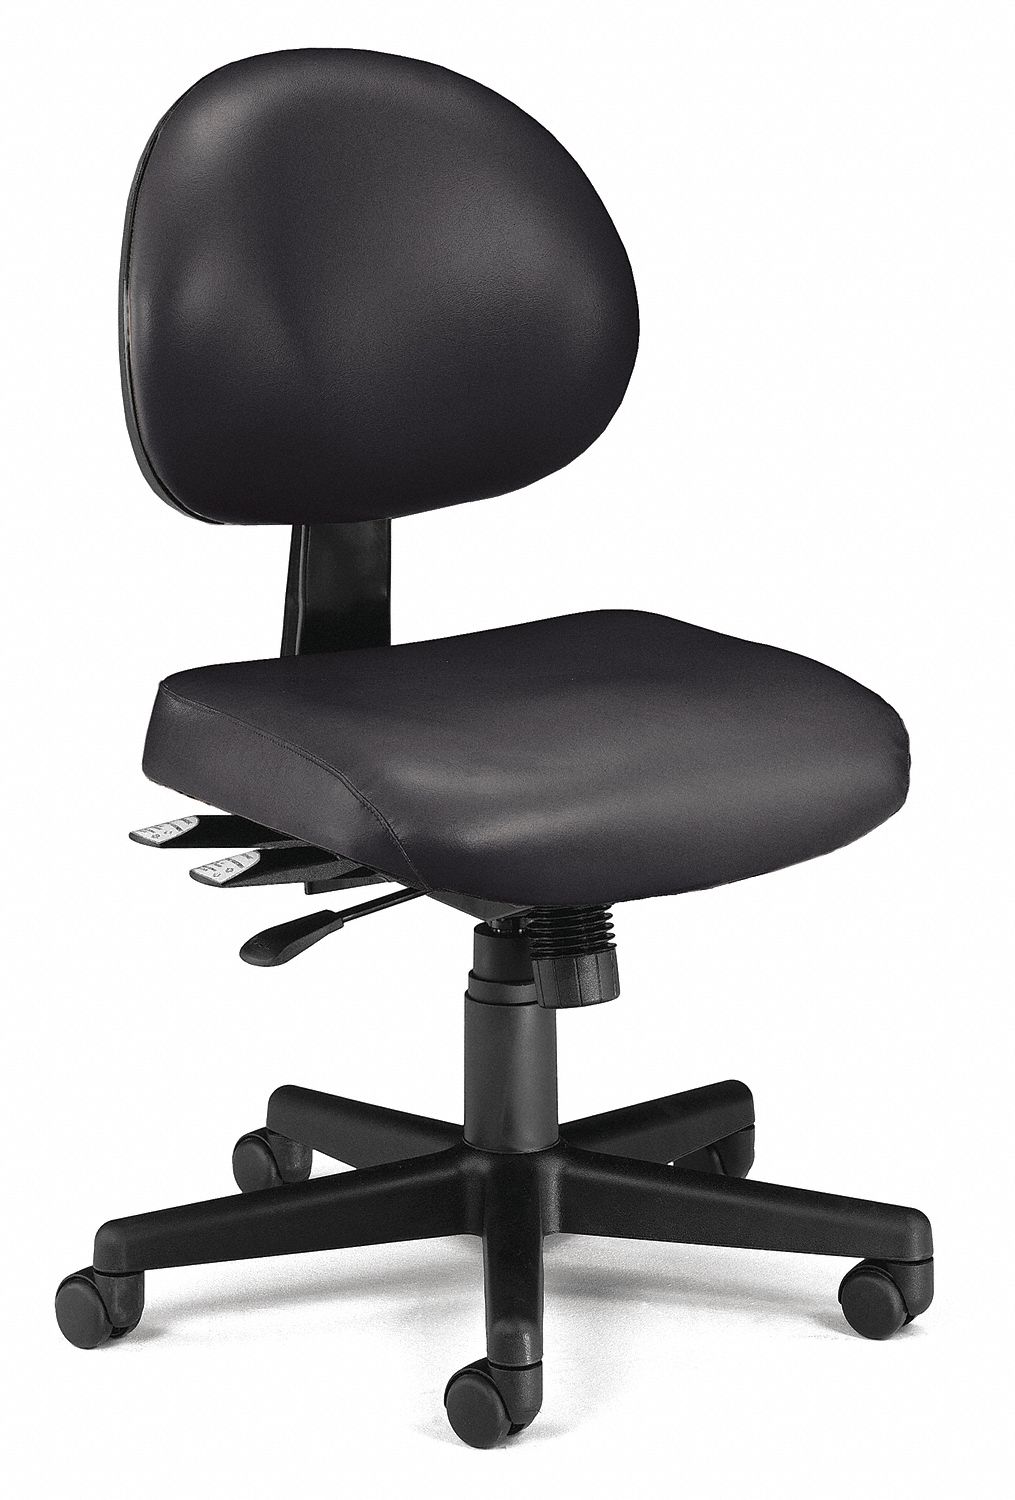 Task Chair: No Arm Arm, Black, Vinyl, 250 lb Wt Capacity, 19 in to 22 in Nom. Seat Ht. Range